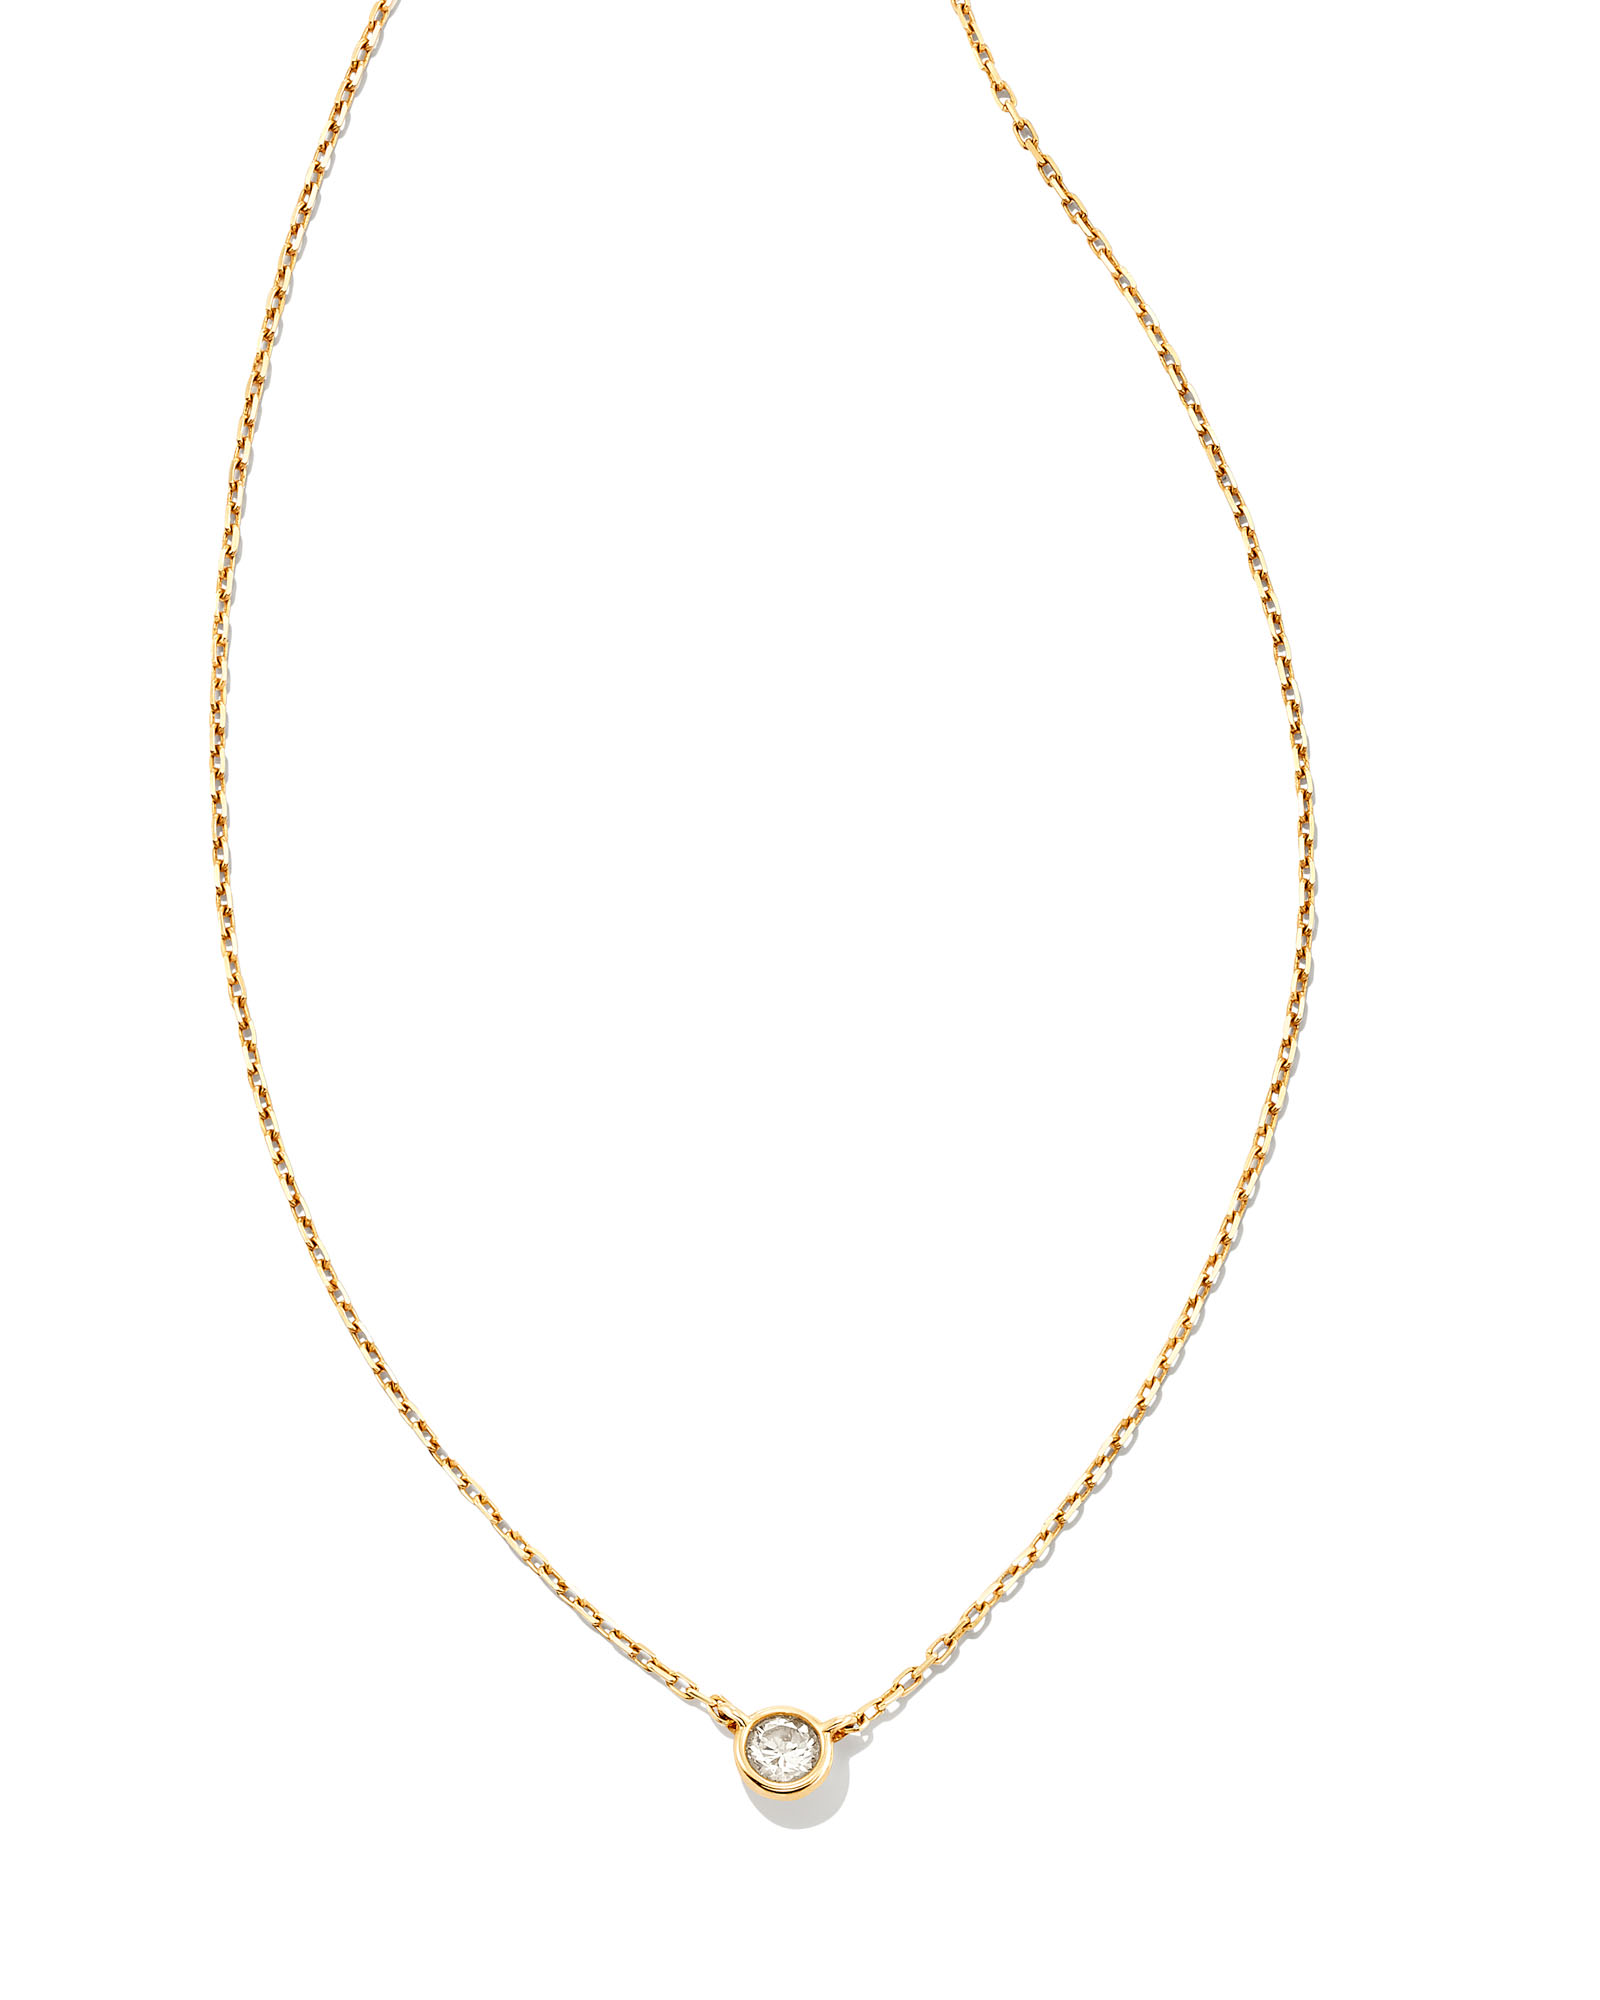 Kendra Scott Vivianne 14k Yellow Gold Pendant Necklace in White Diamond |  The Summit at Fritz Farm